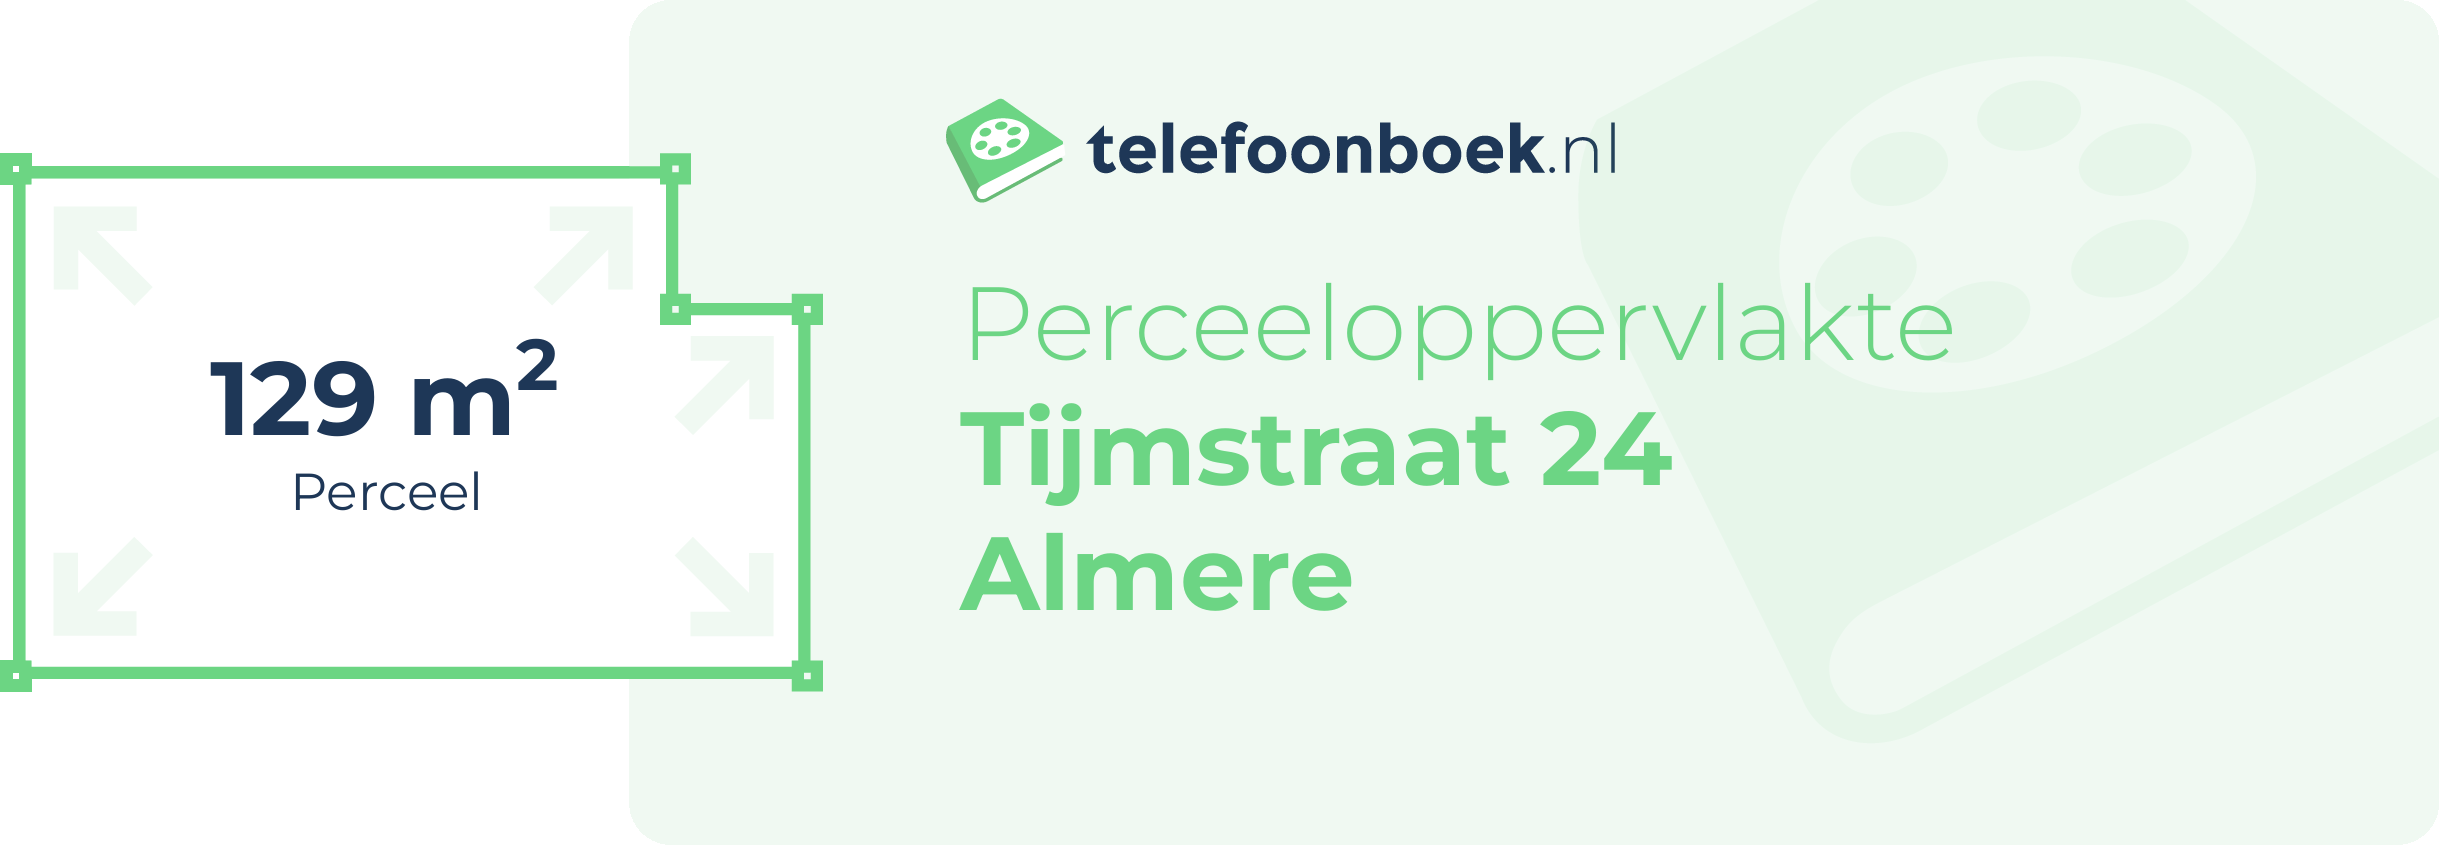 Perceeloppervlakte Tijmstraat 24 Almere